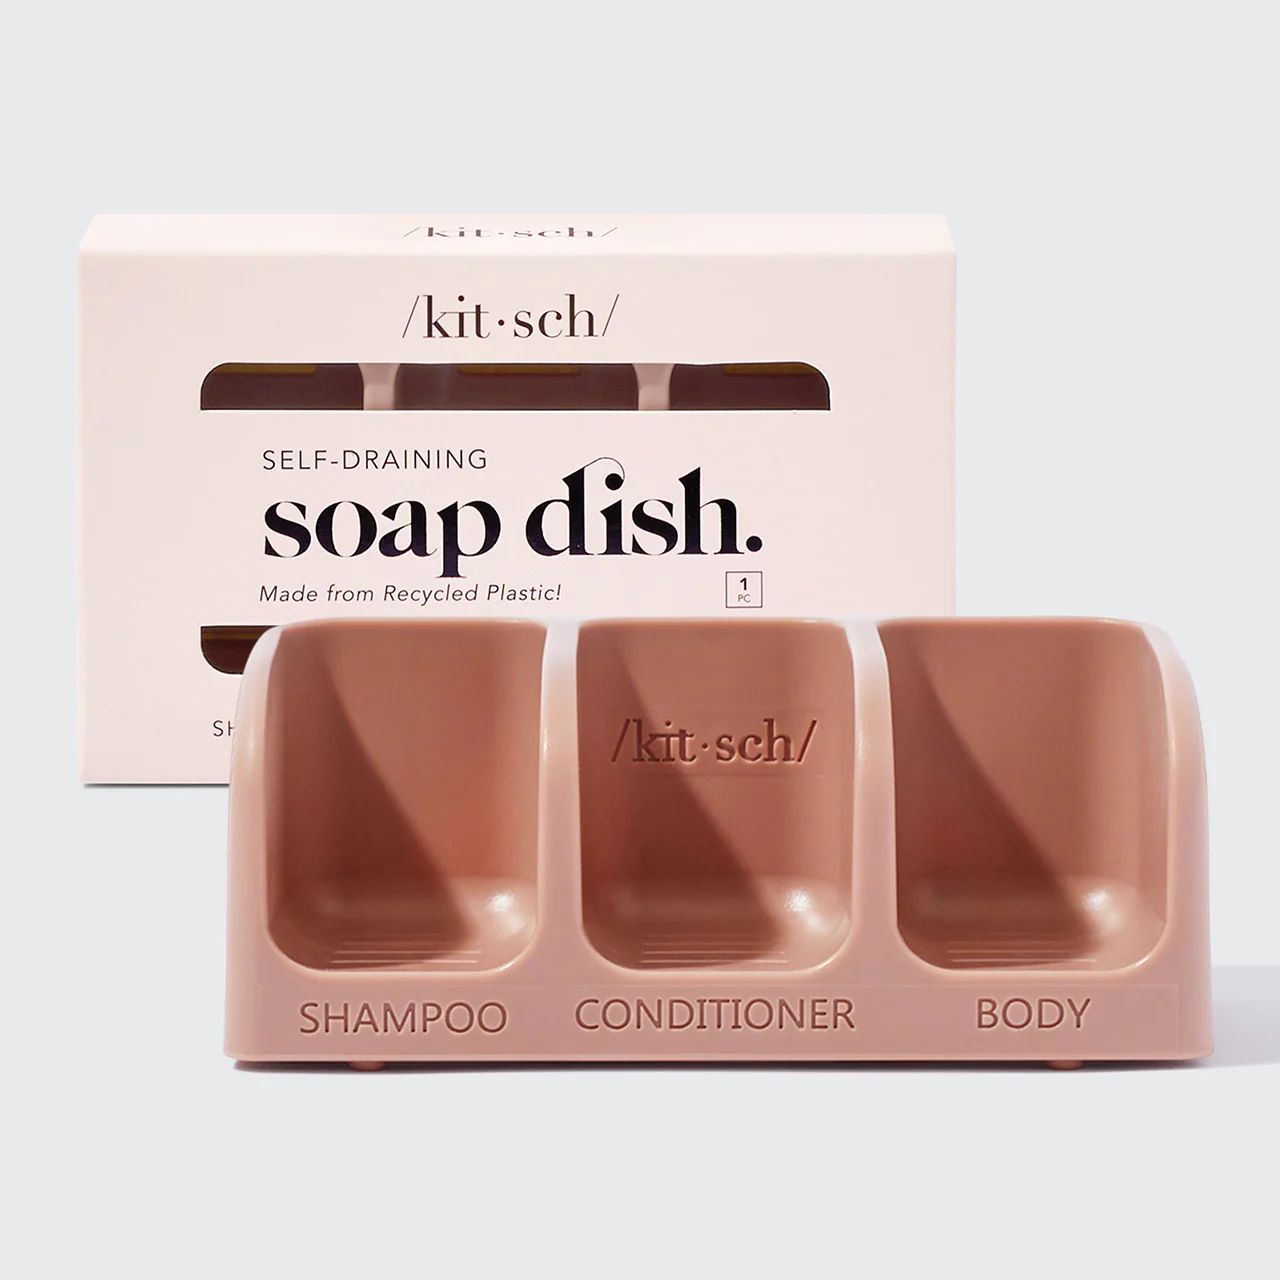 Self-Draining Soap Dish | Kitsch